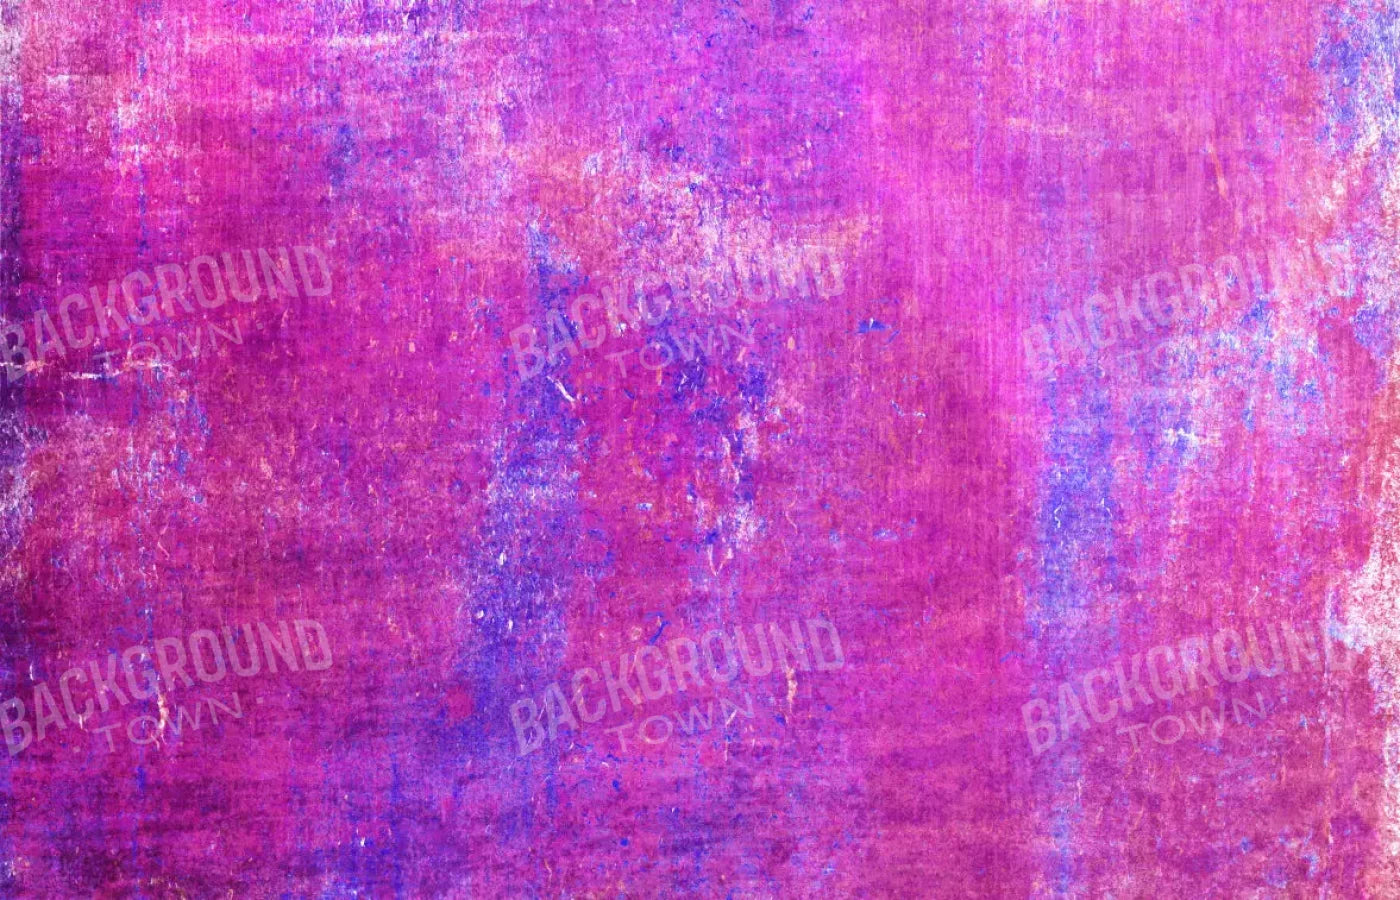 Becca 12X8 Ultracloth ( 144 X 96 Inch ) Backdrop